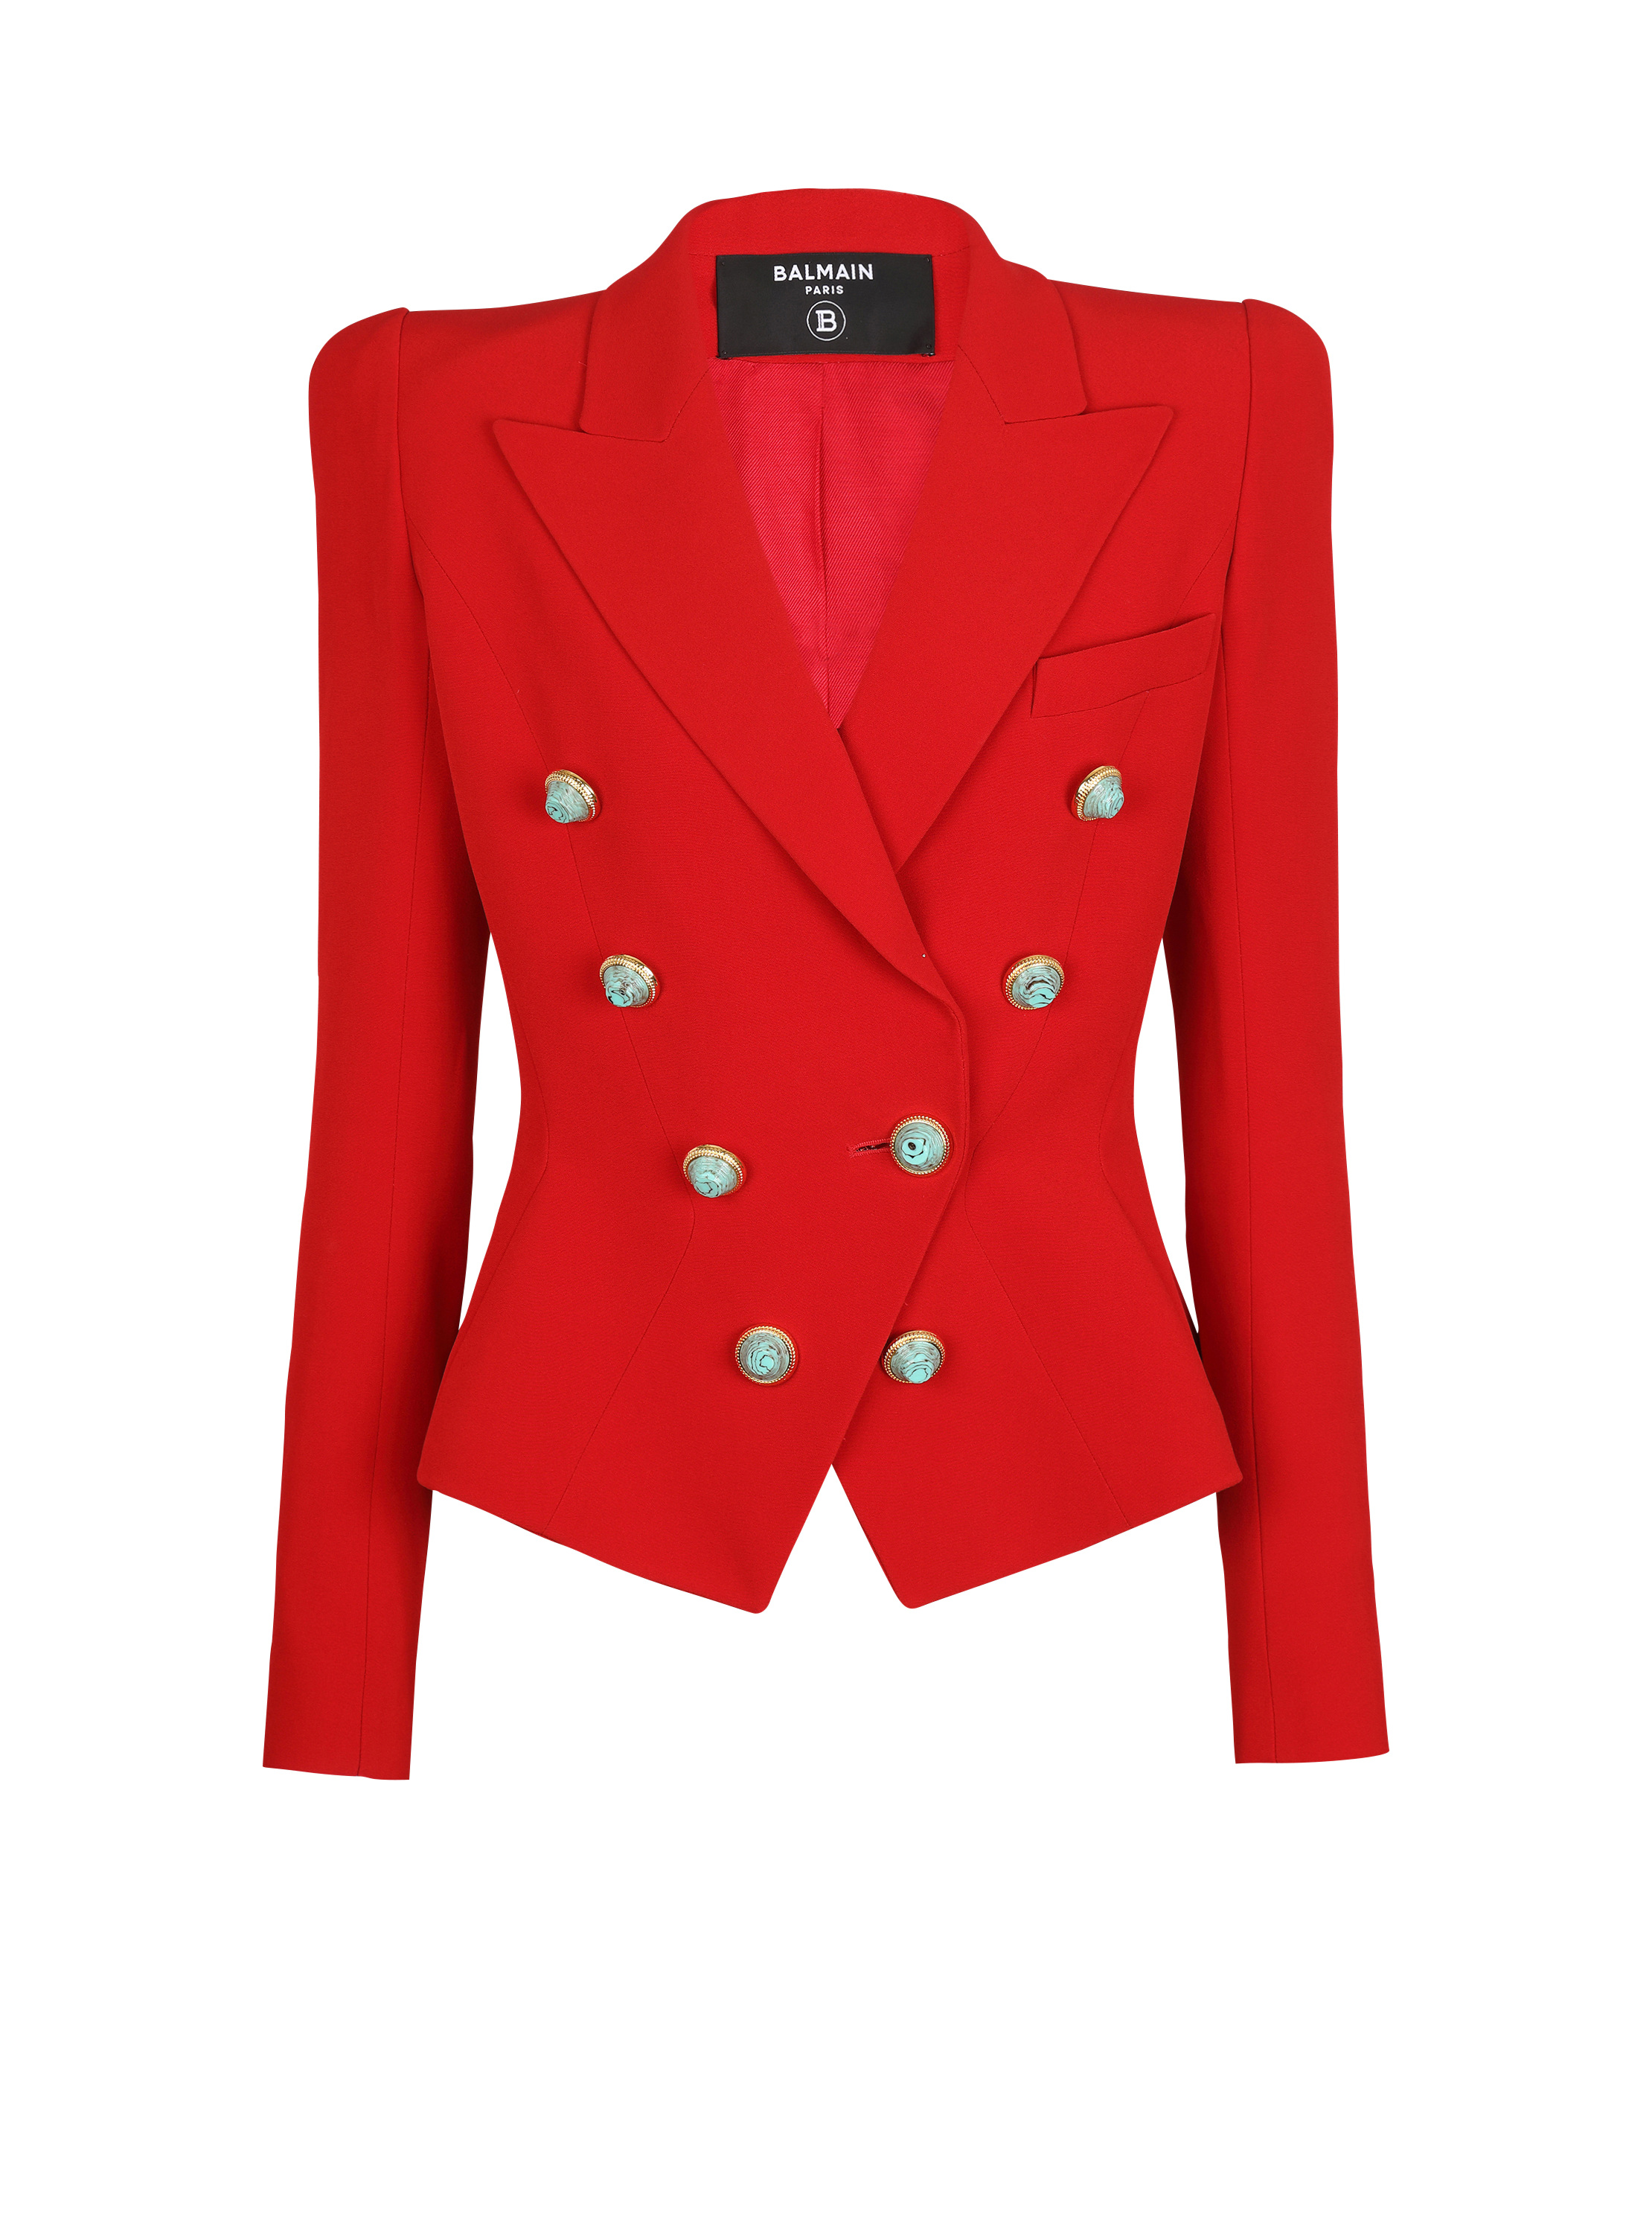 Taillierte Jacke aus Crêpe, rot, hi-res